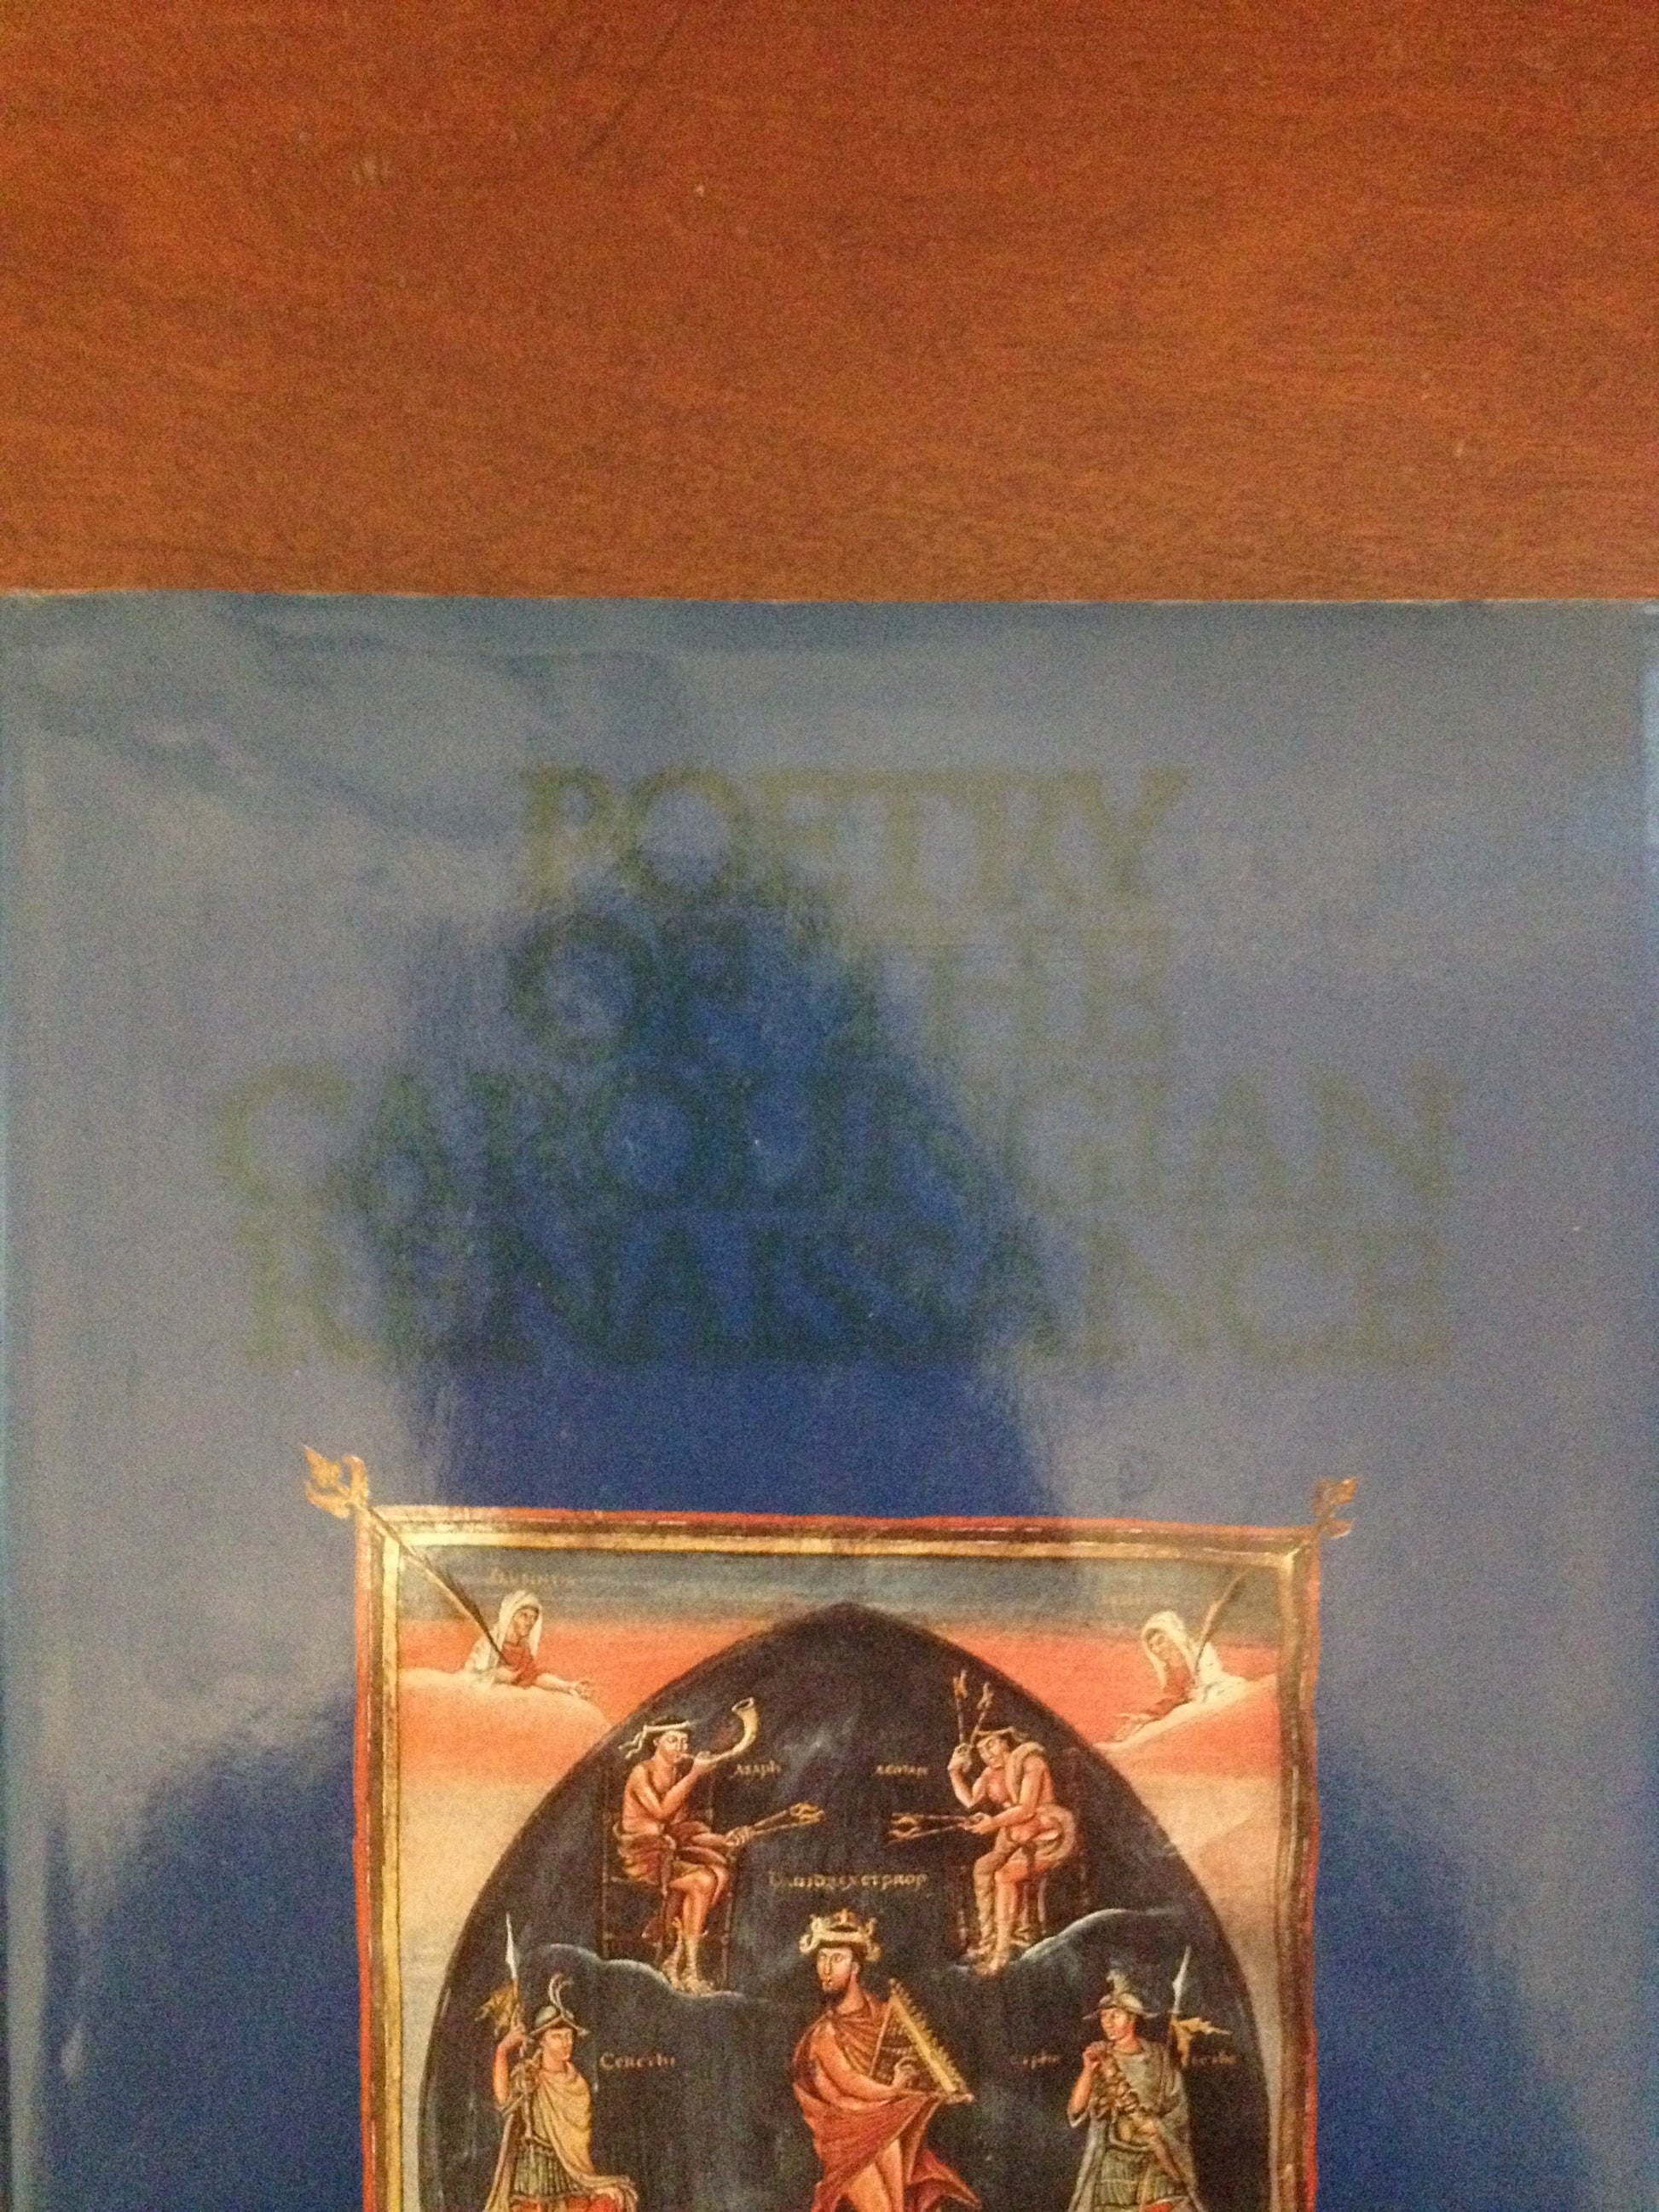 POETRY OF THE CAROLINGIAN RENAISSANCE - PETER GODMAN BooksCardsNBikes